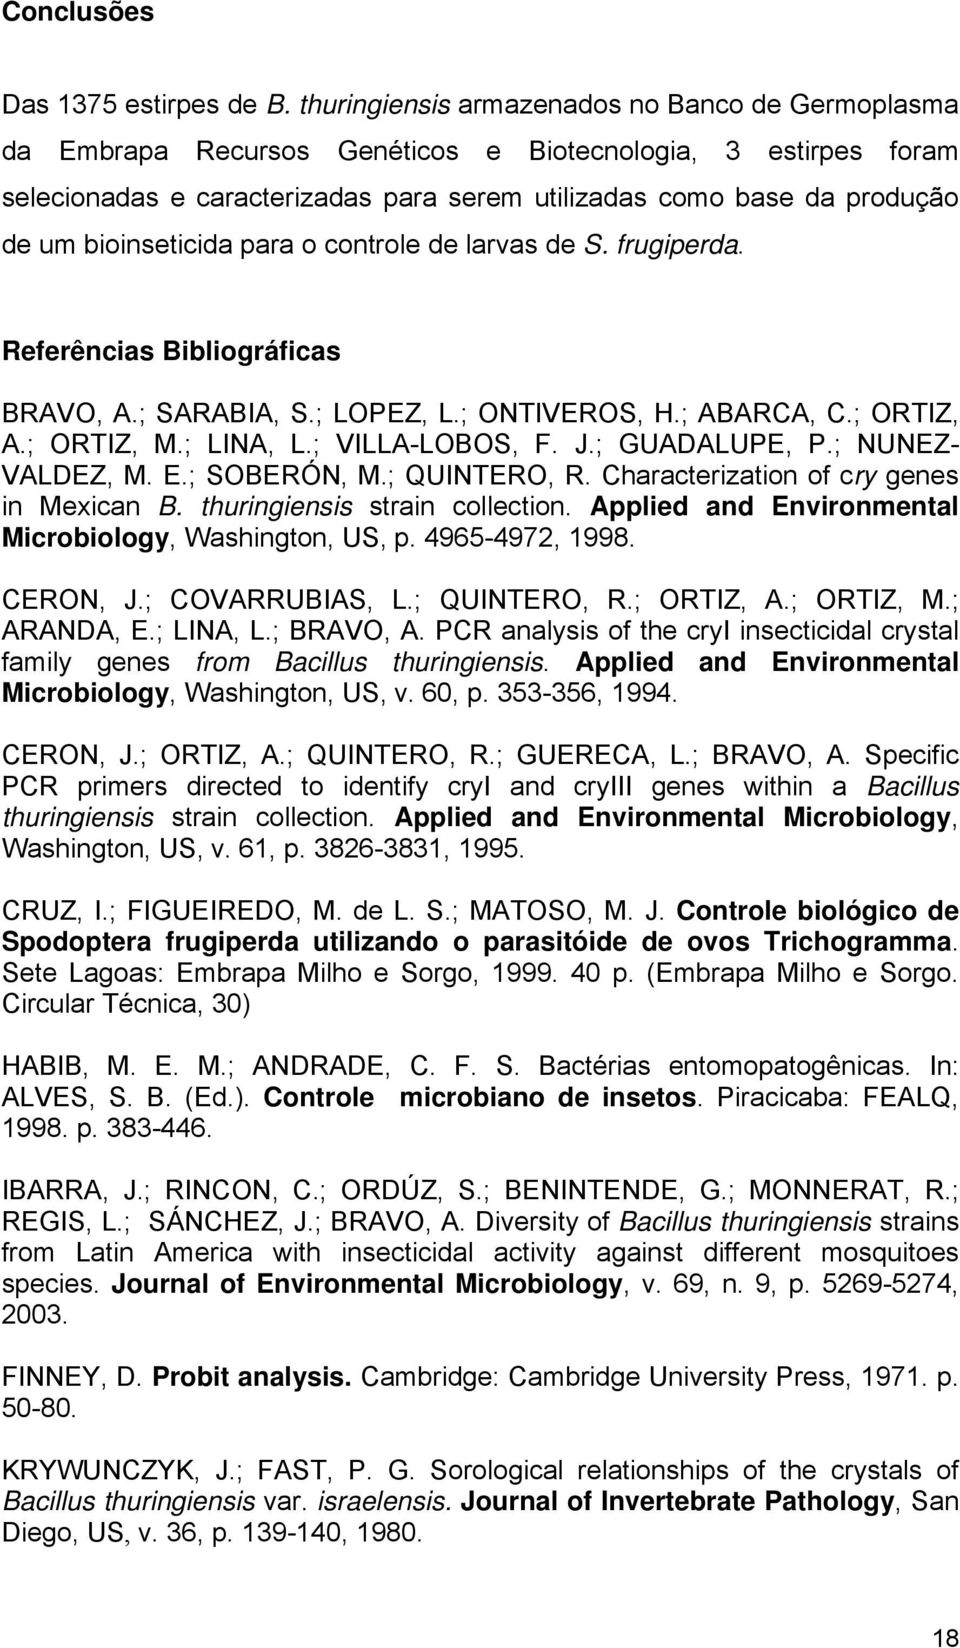 bioinseticida para o controle de larvas de S. frugiperda. Referências Bibliográficas BRAVO, A.; SARABIA, S.; LOPEZ, L.; ONTIVEROS, H.; ABARCA, C.; ORTIZ, A.; ORTIZ, M.; LINA, L.; VILLA-LOBOS, F. J.